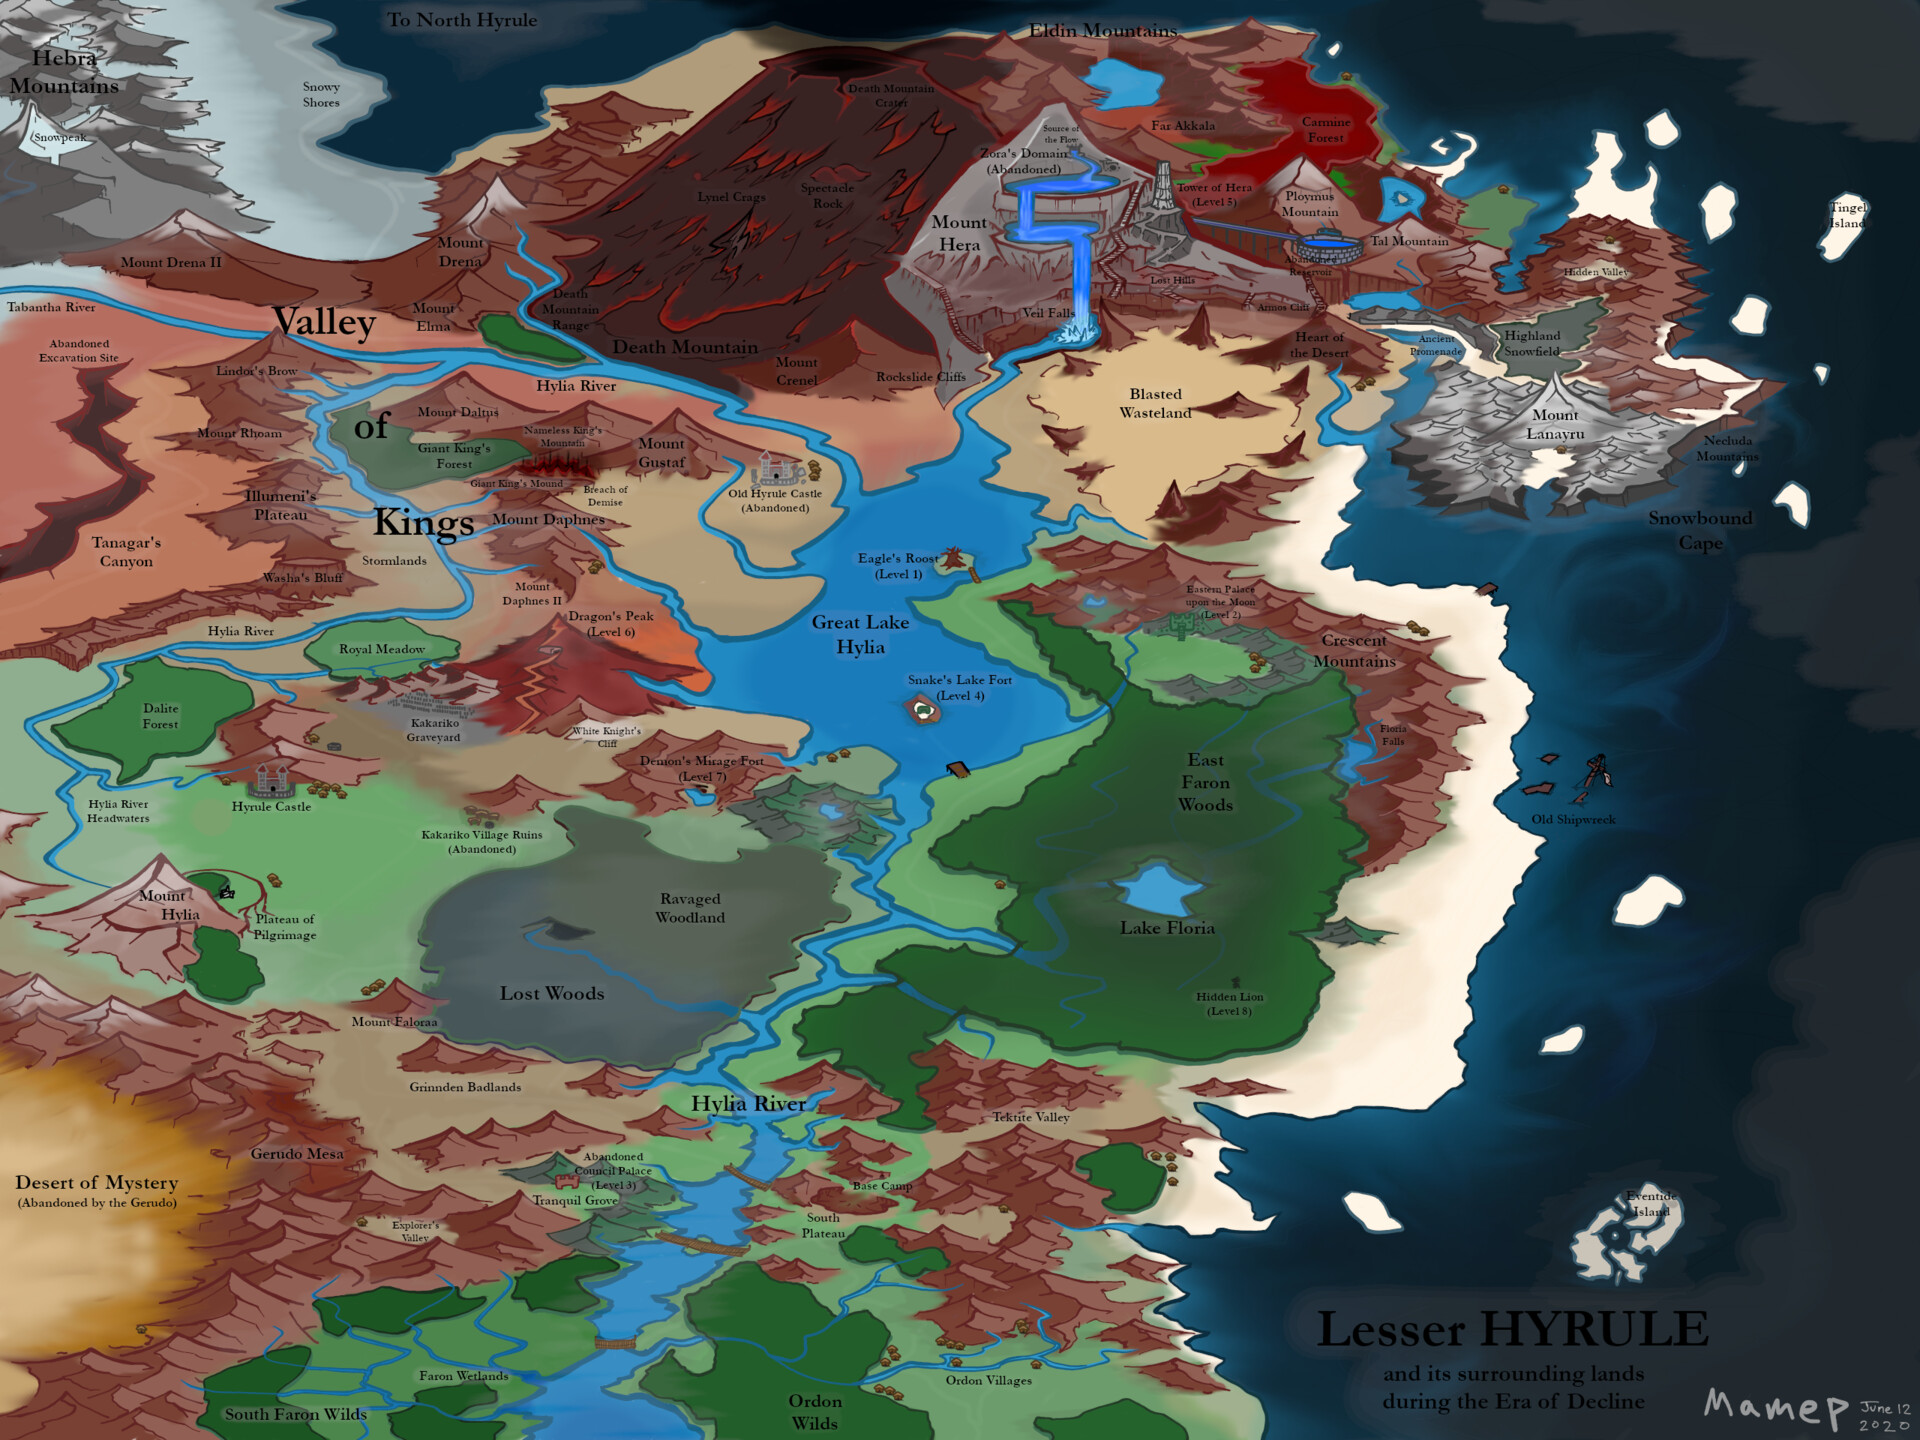 ArtStation - Hyrule Map : Breath of the Wild